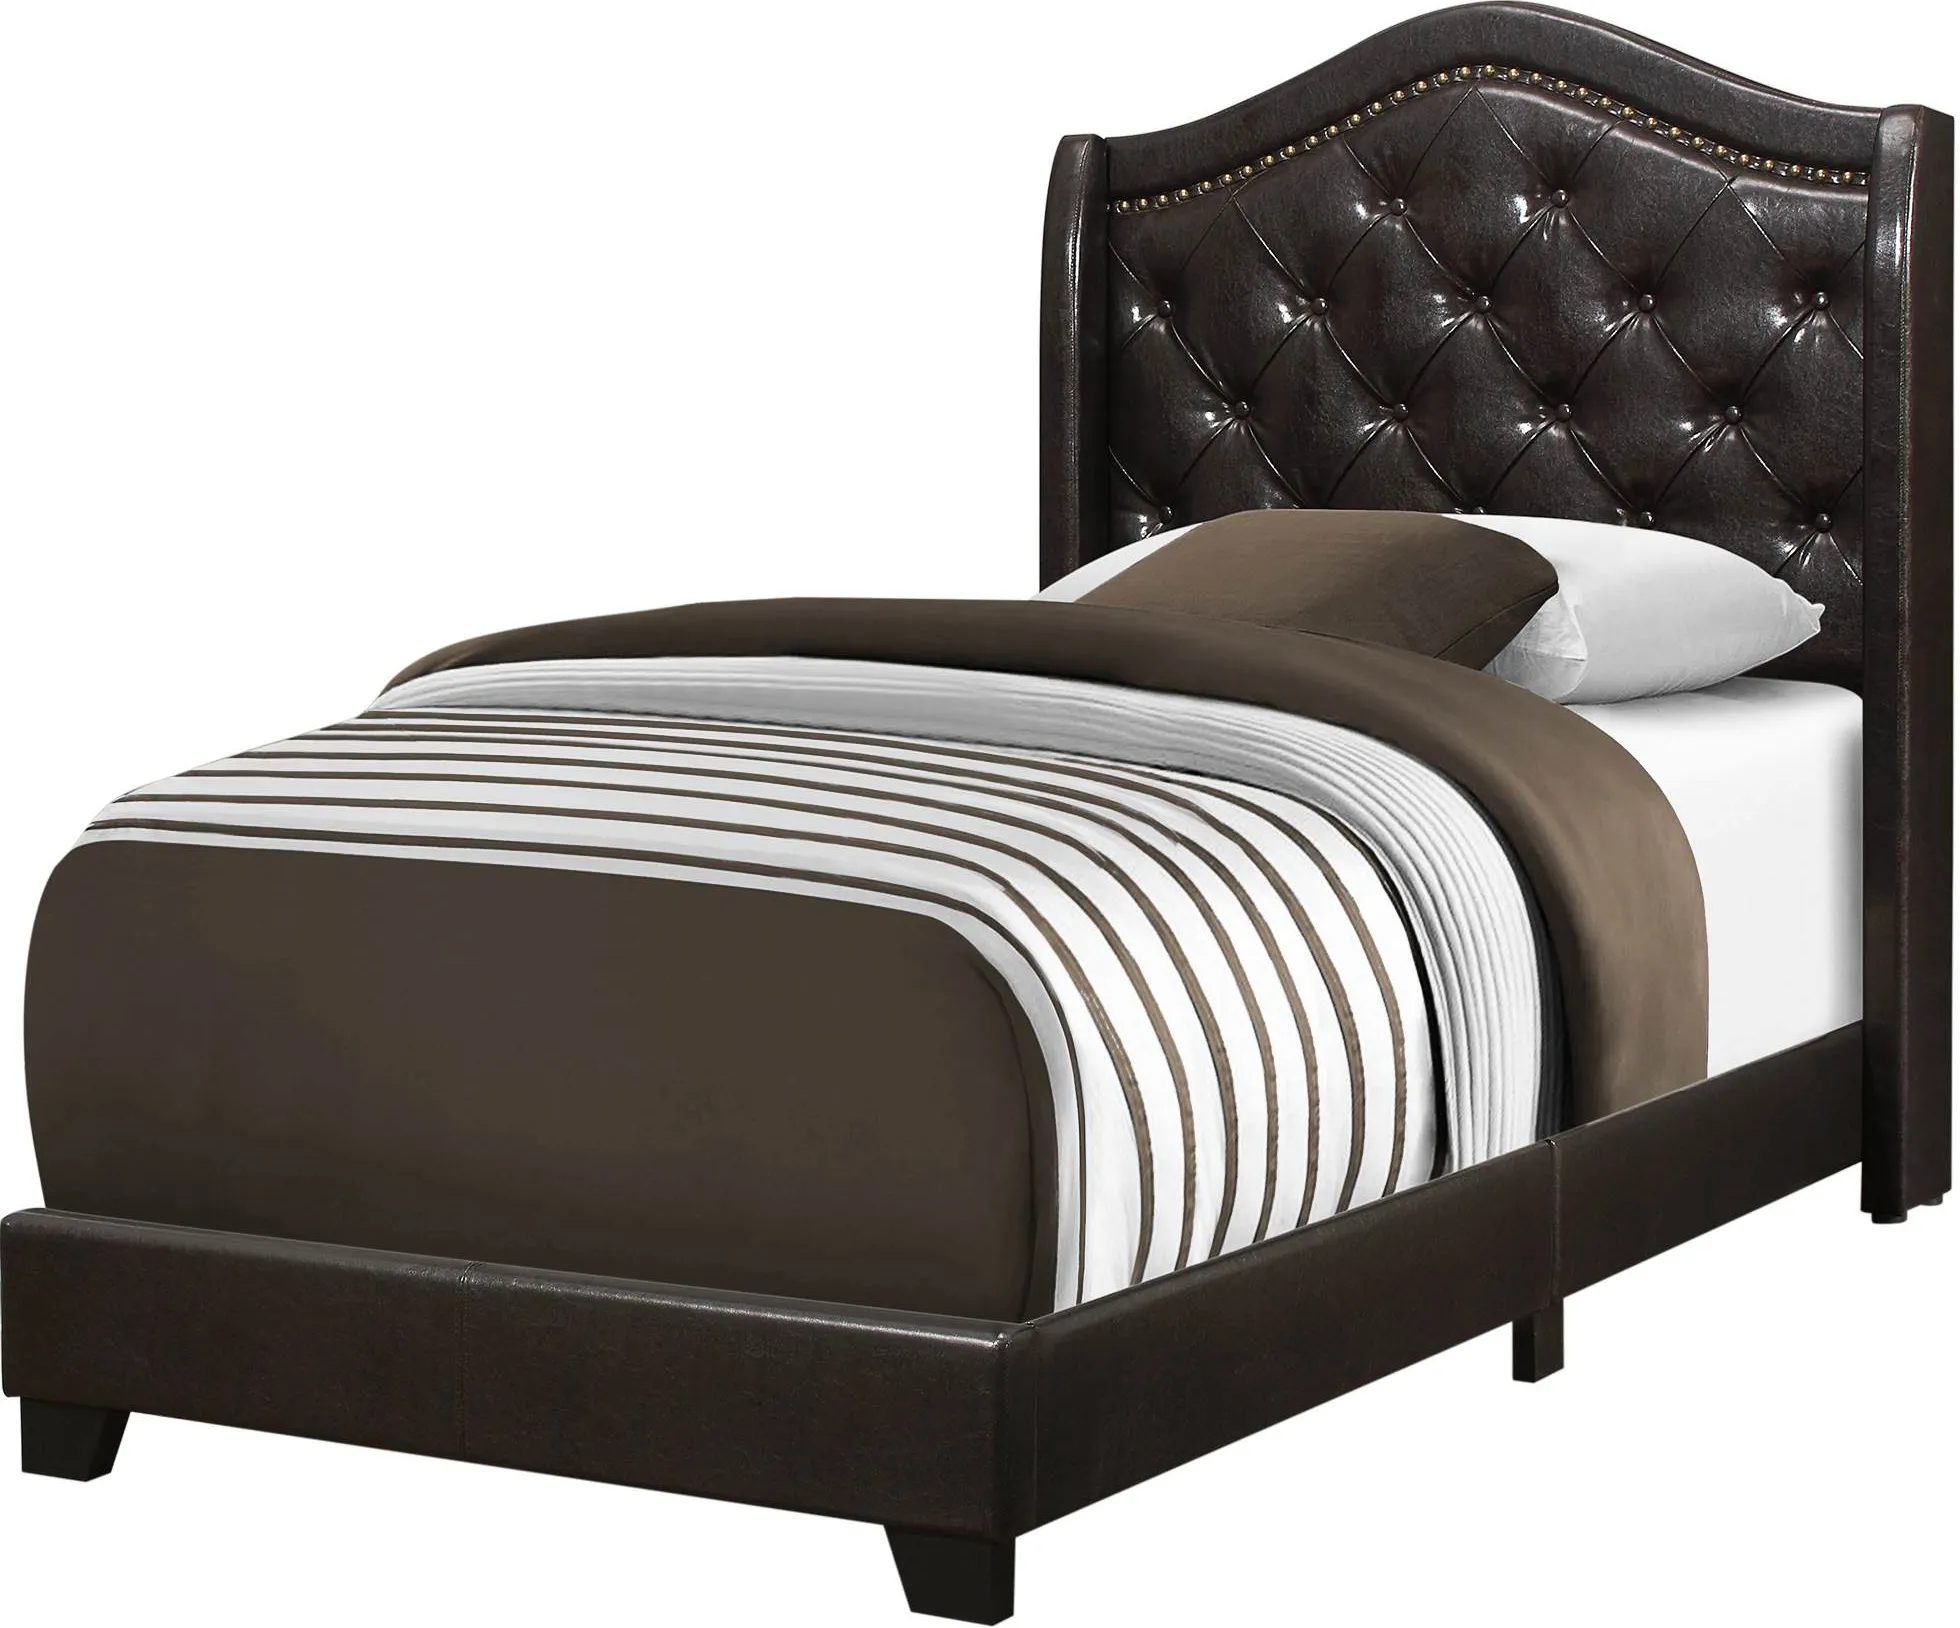 Bed, Twin Size, Platform, Teen, Frame, Upholstered, Velvet, Wood Legs, Brown, Traditional